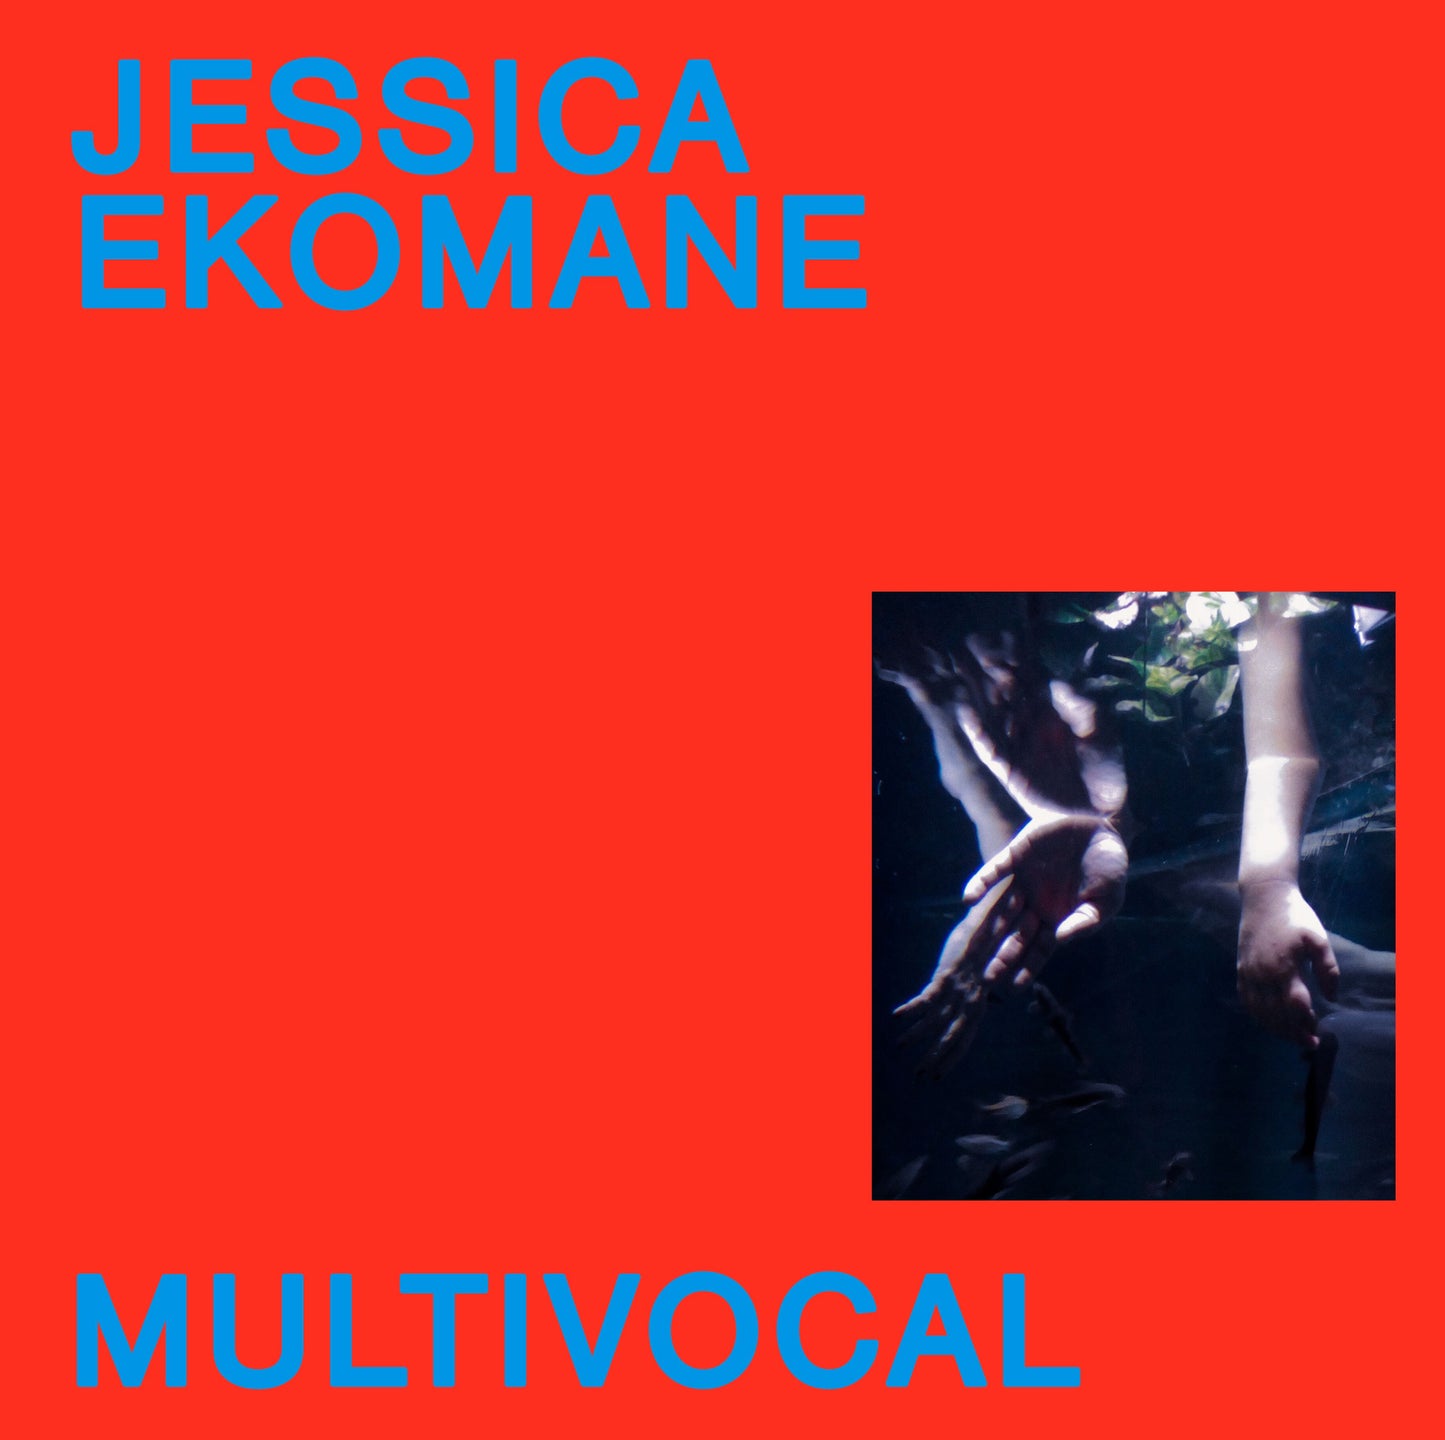 Jessica Ekomane - Multivocal - LP